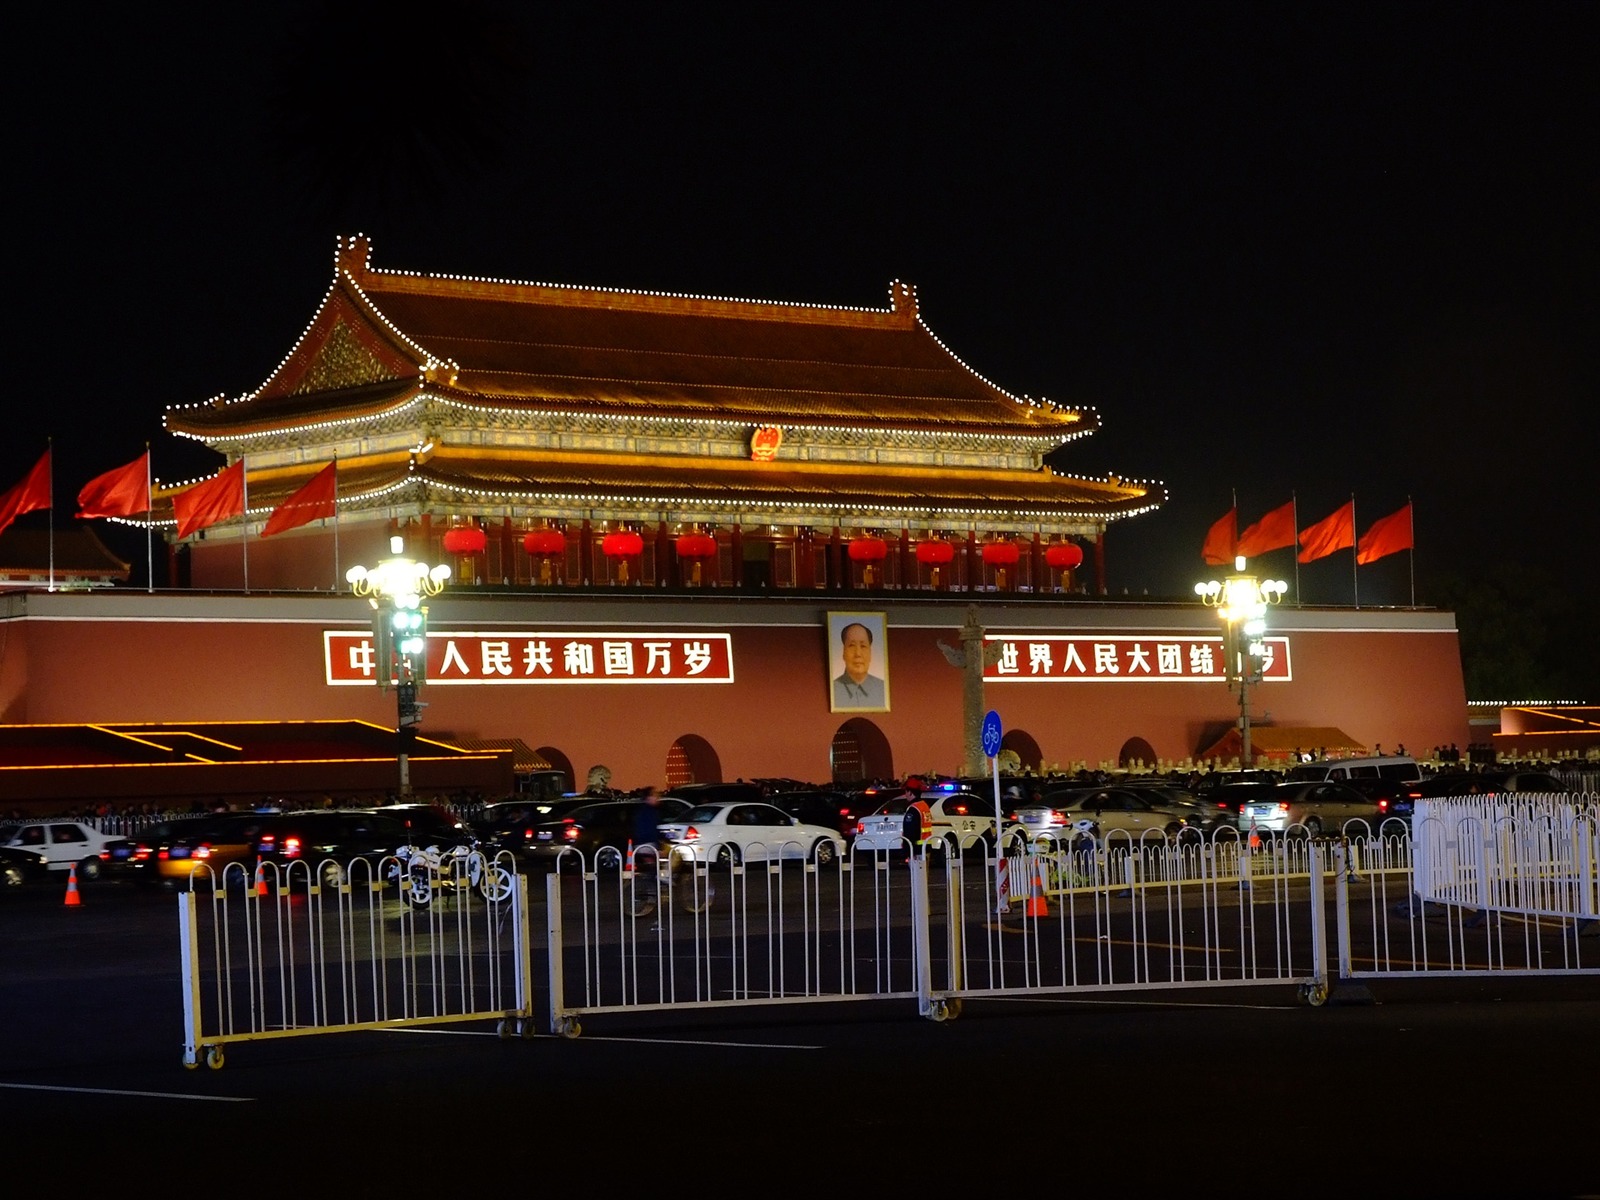 На площади Тяньаньмэнь красочные ночь (арматурных работ) #30 - 1600x1200